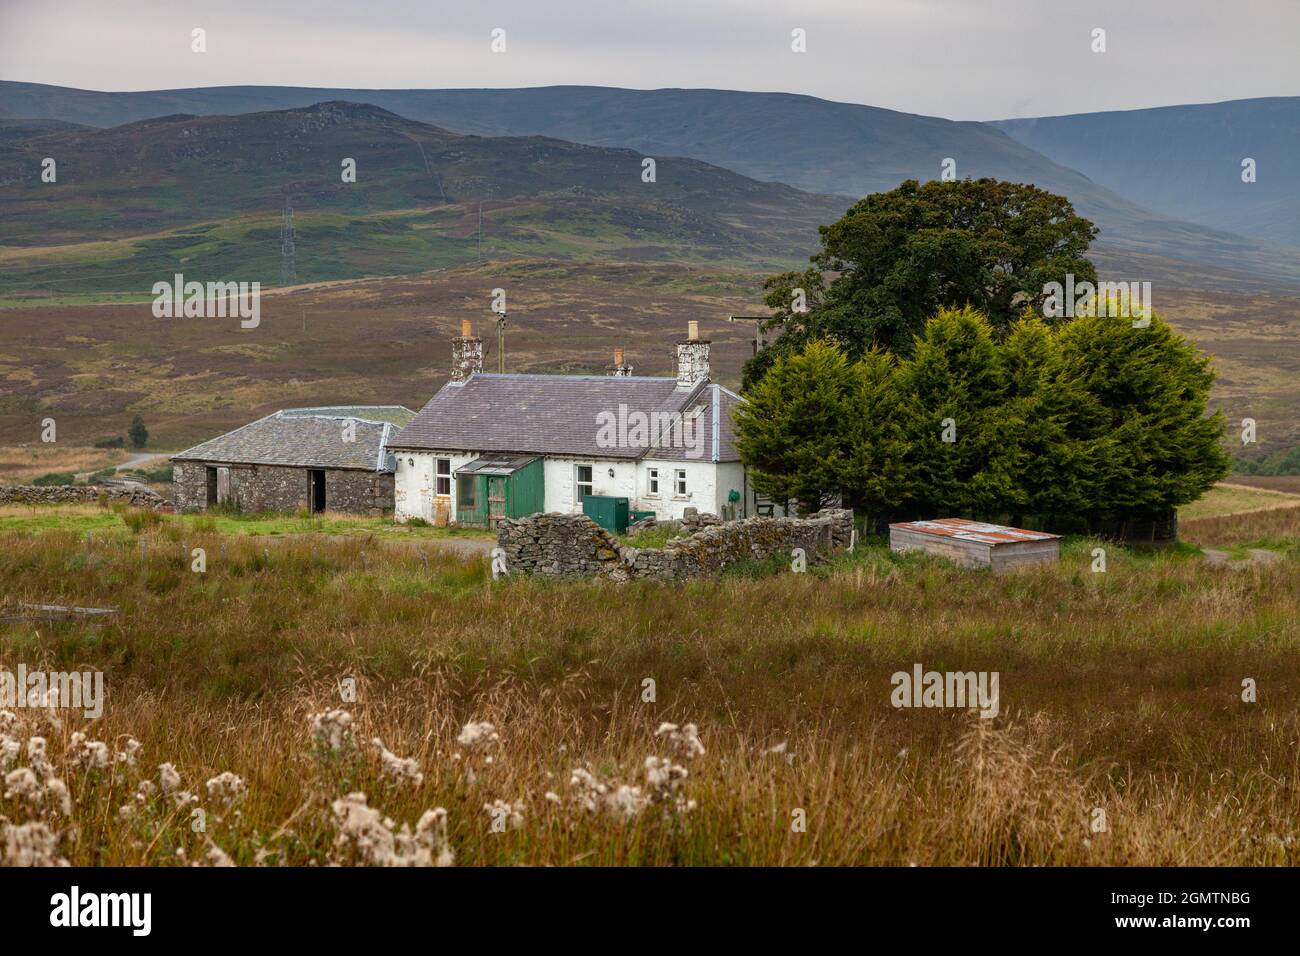 A rural farm house near Amulree Perth and Kinross, Scotland Stock Photo